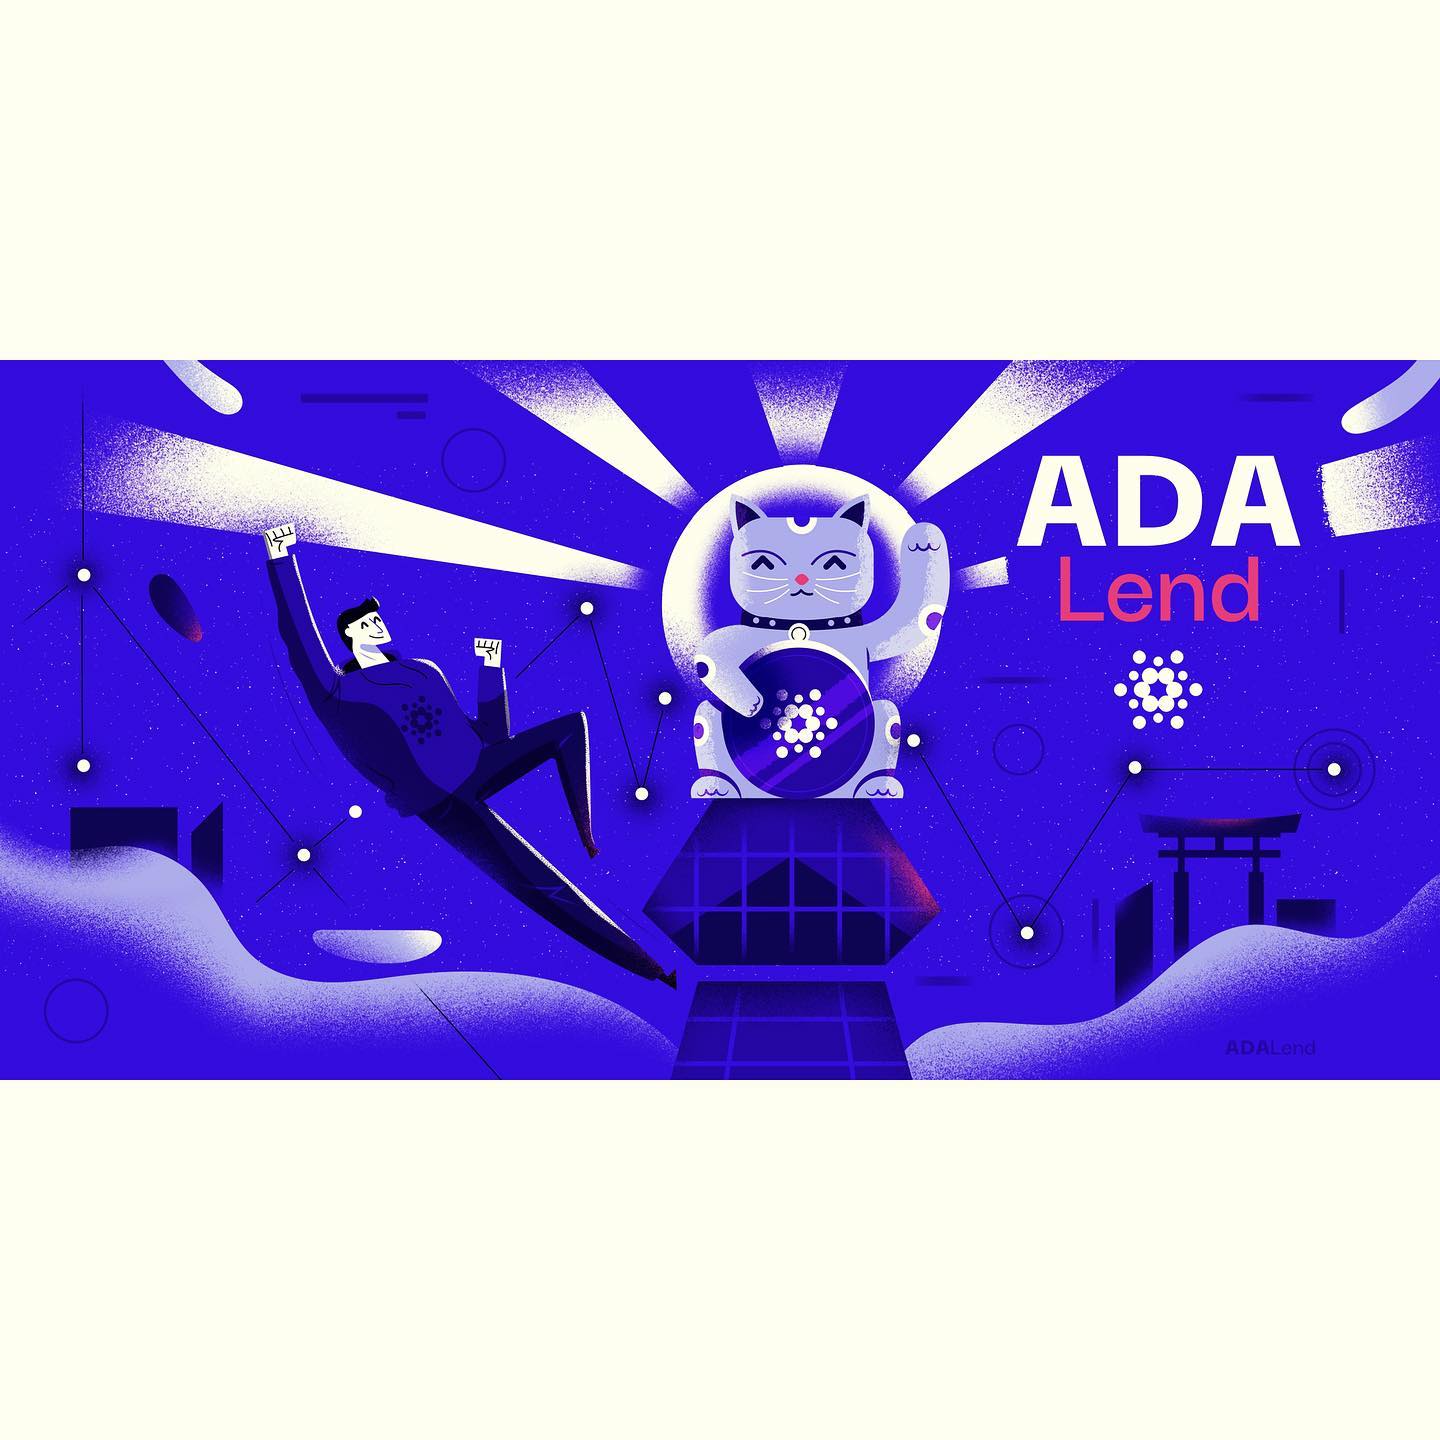 :::Crypto in Japan - efitorial illustration for ADA Lend:::..Adobe illustrator + Photoshop.#crypto #ada #cardano #japan #luckycat #cat #illustration #editorialillustration #sounasart